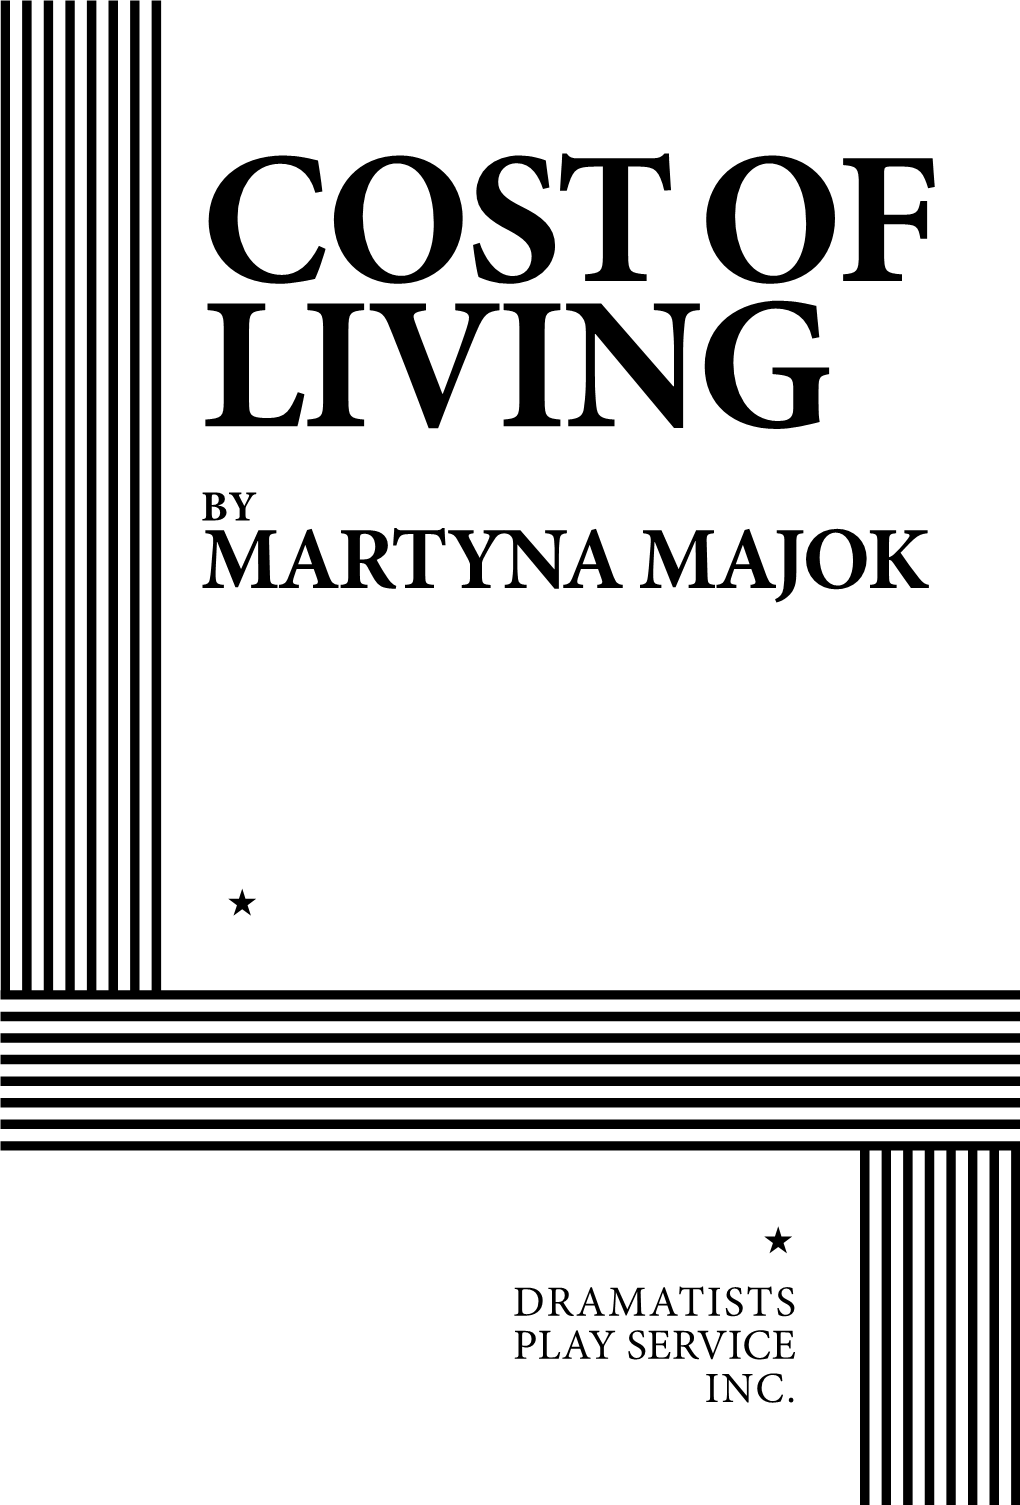 Martyna Majok